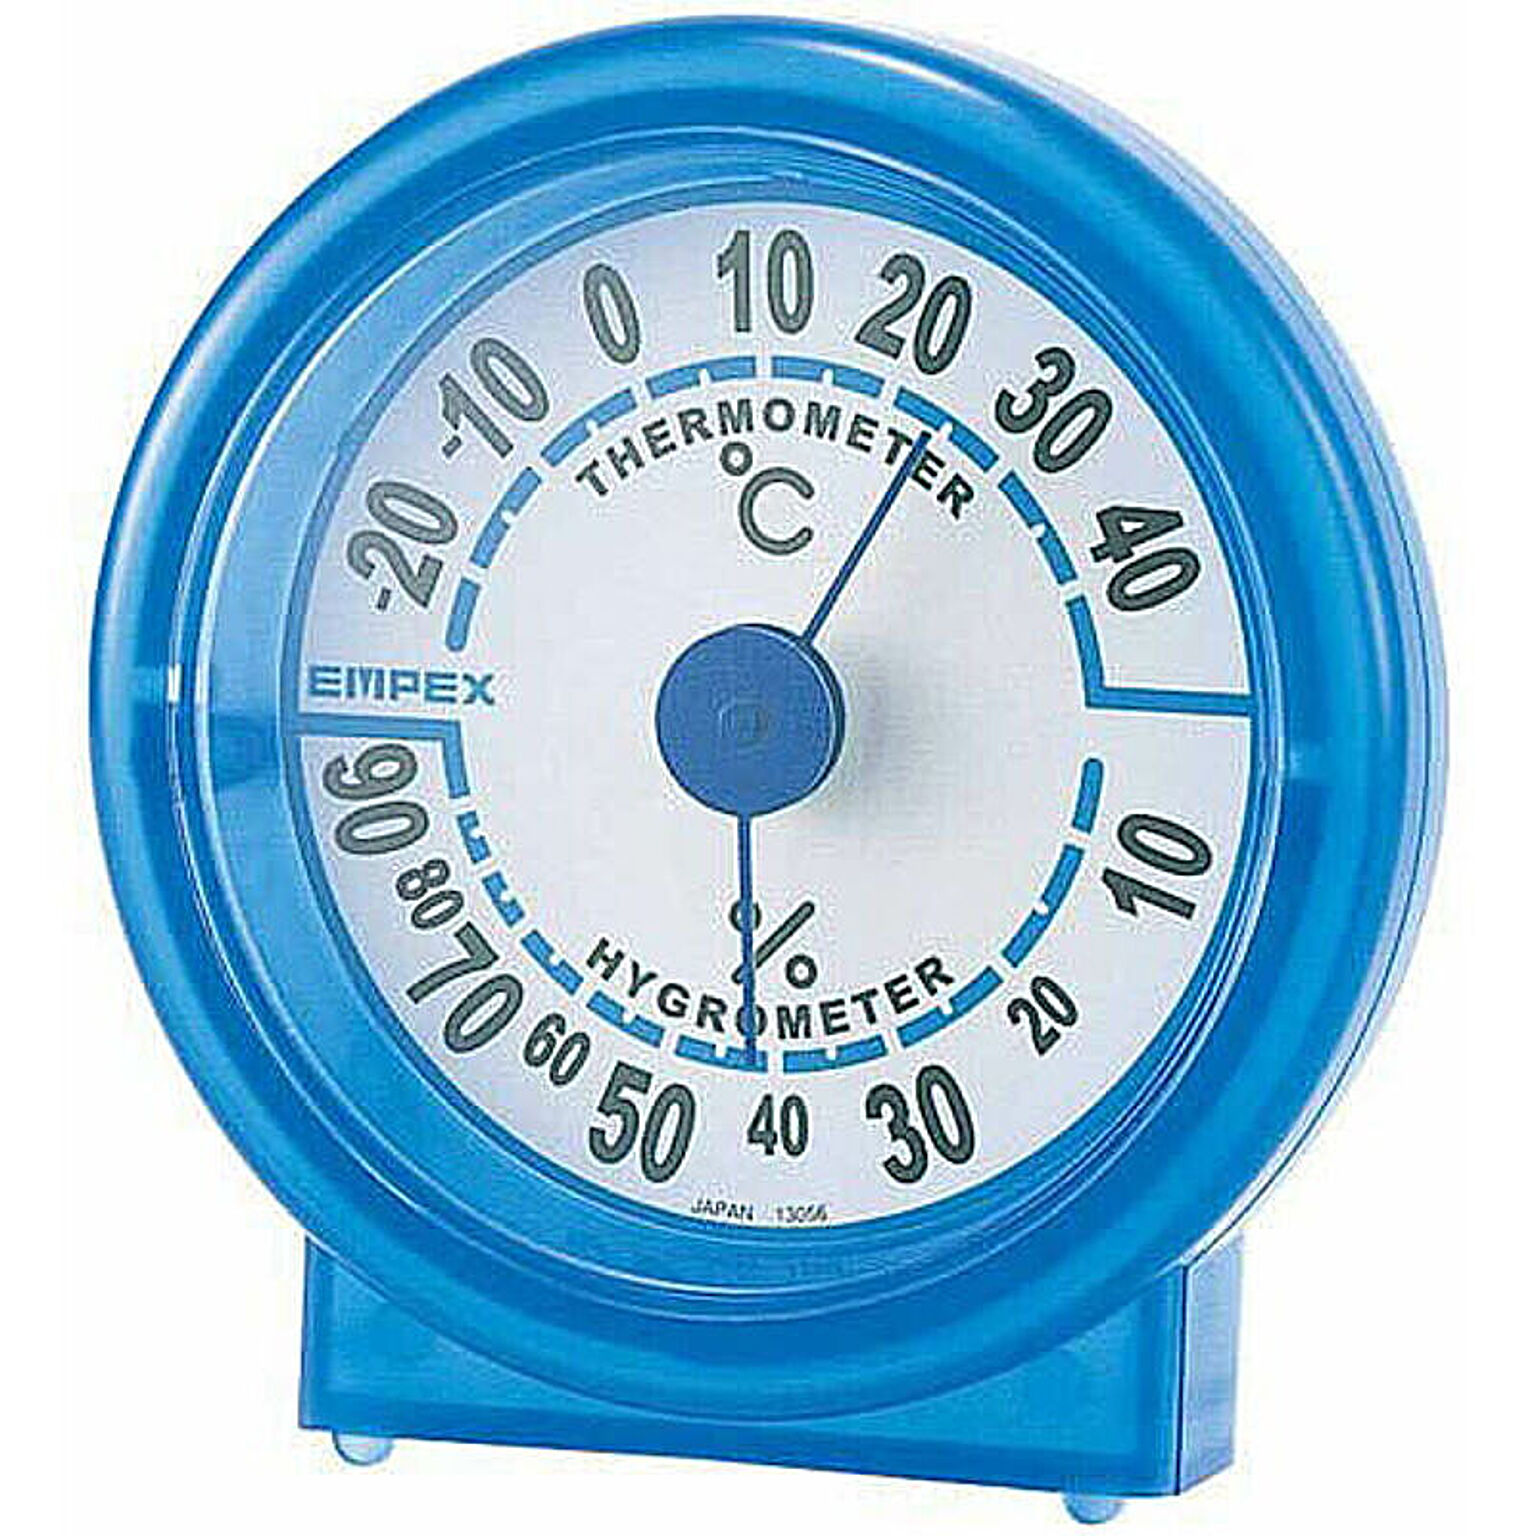 EMPEX 温度・湿度計 シュクレ温度・湿度計 TM-5526 クリアブルー 管理No. 4961386552605